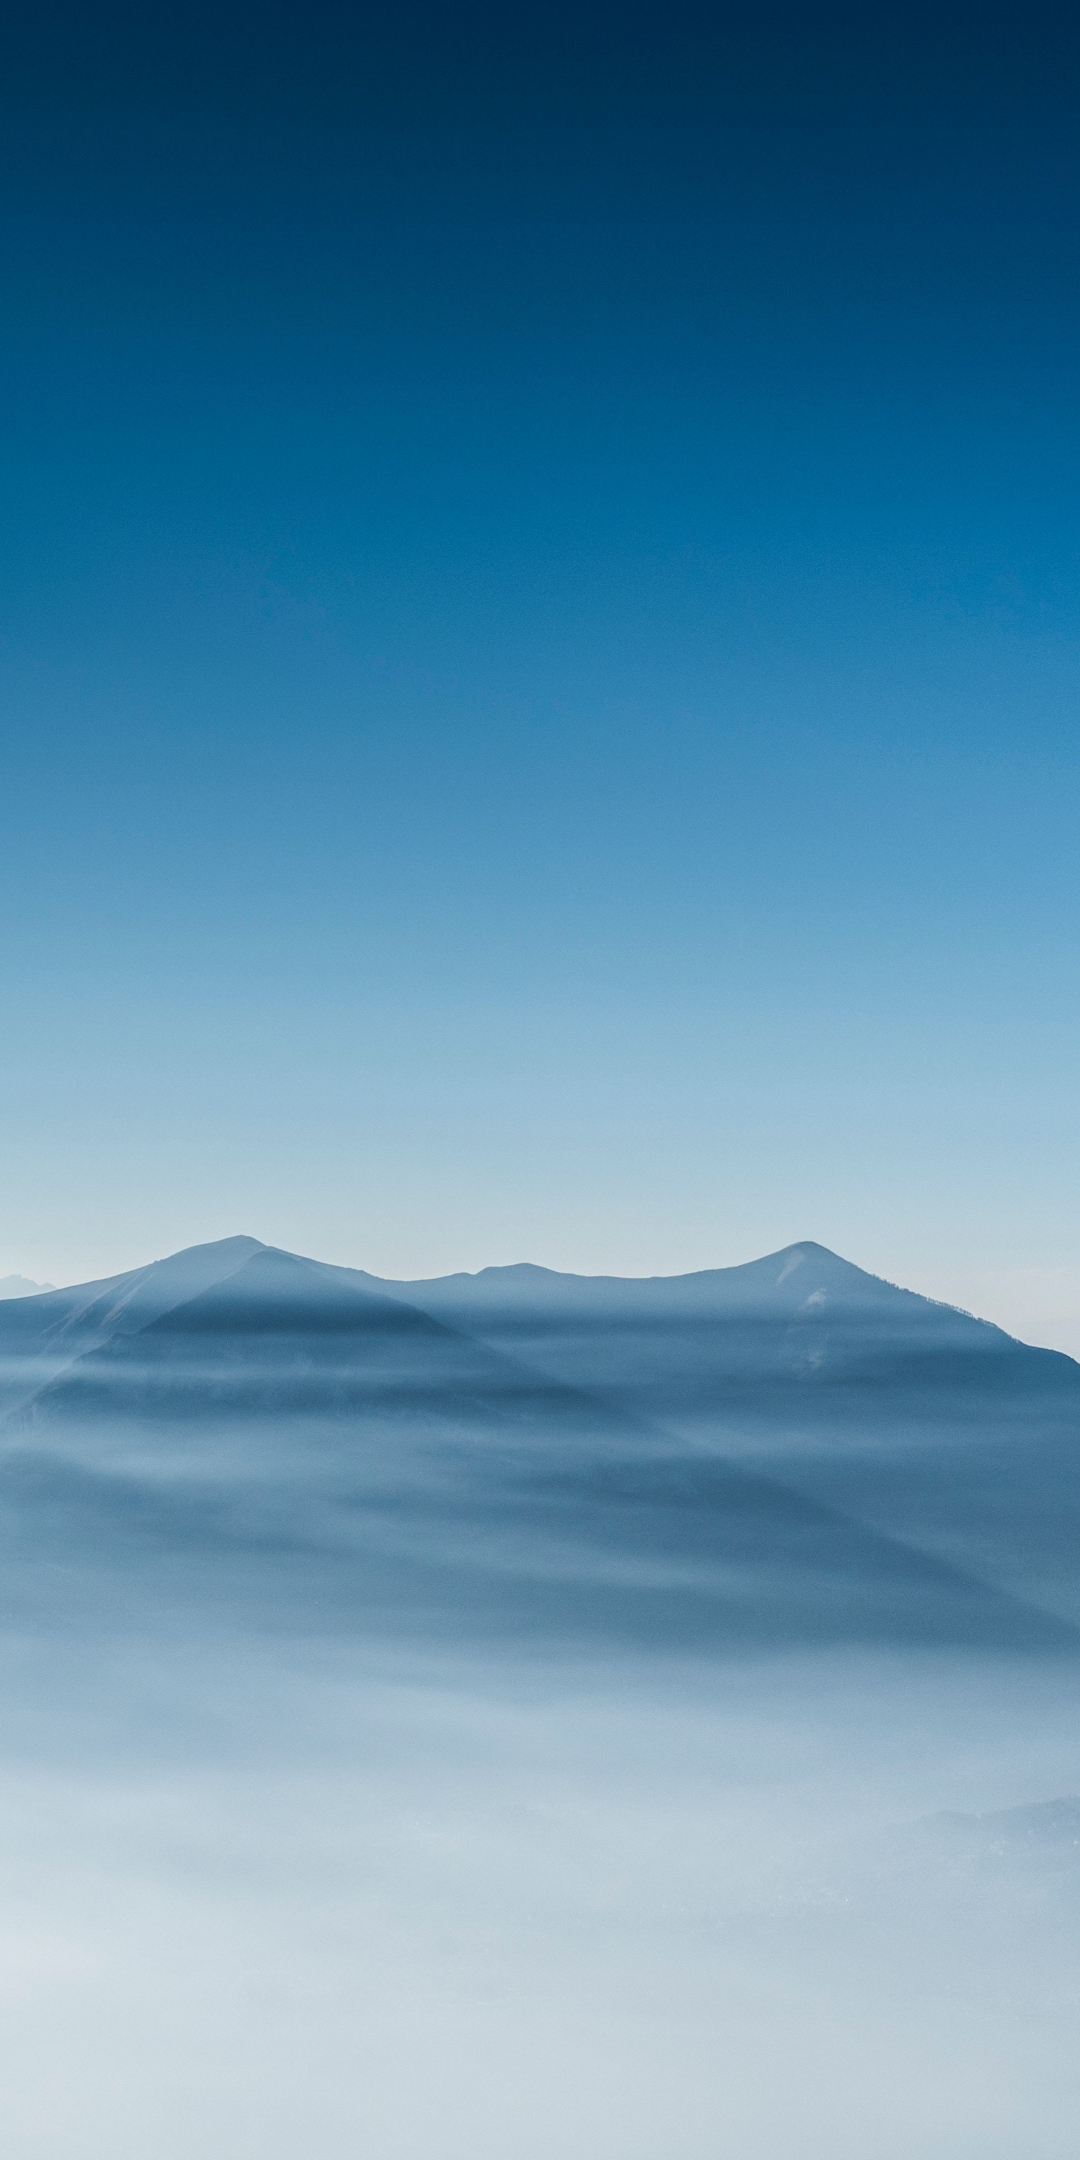 Mountains, dawn, nature, clouds, blue sky, clean, fog, 1080x2160 wallpaper